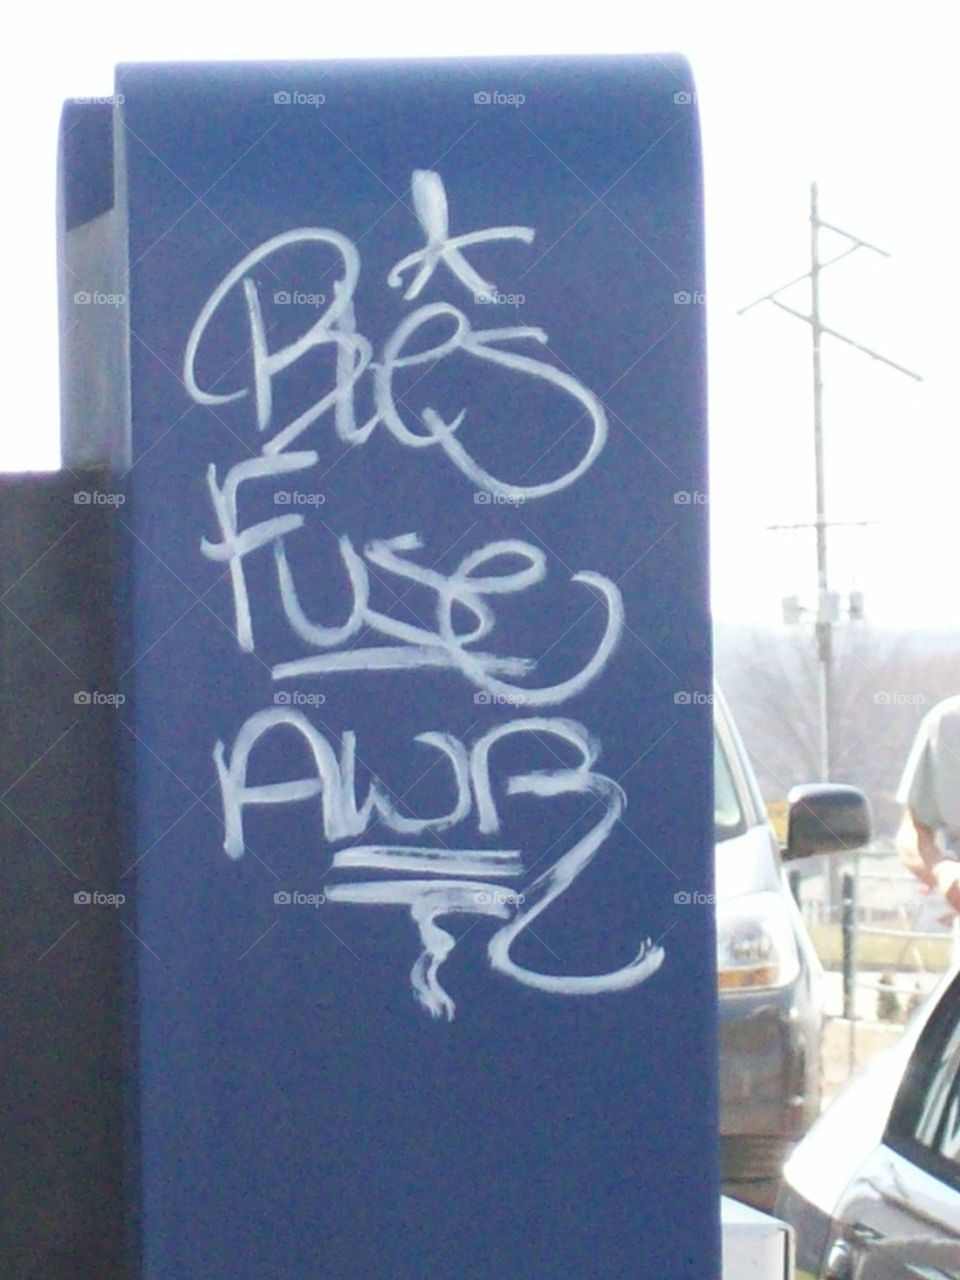 Payphone Graffiti